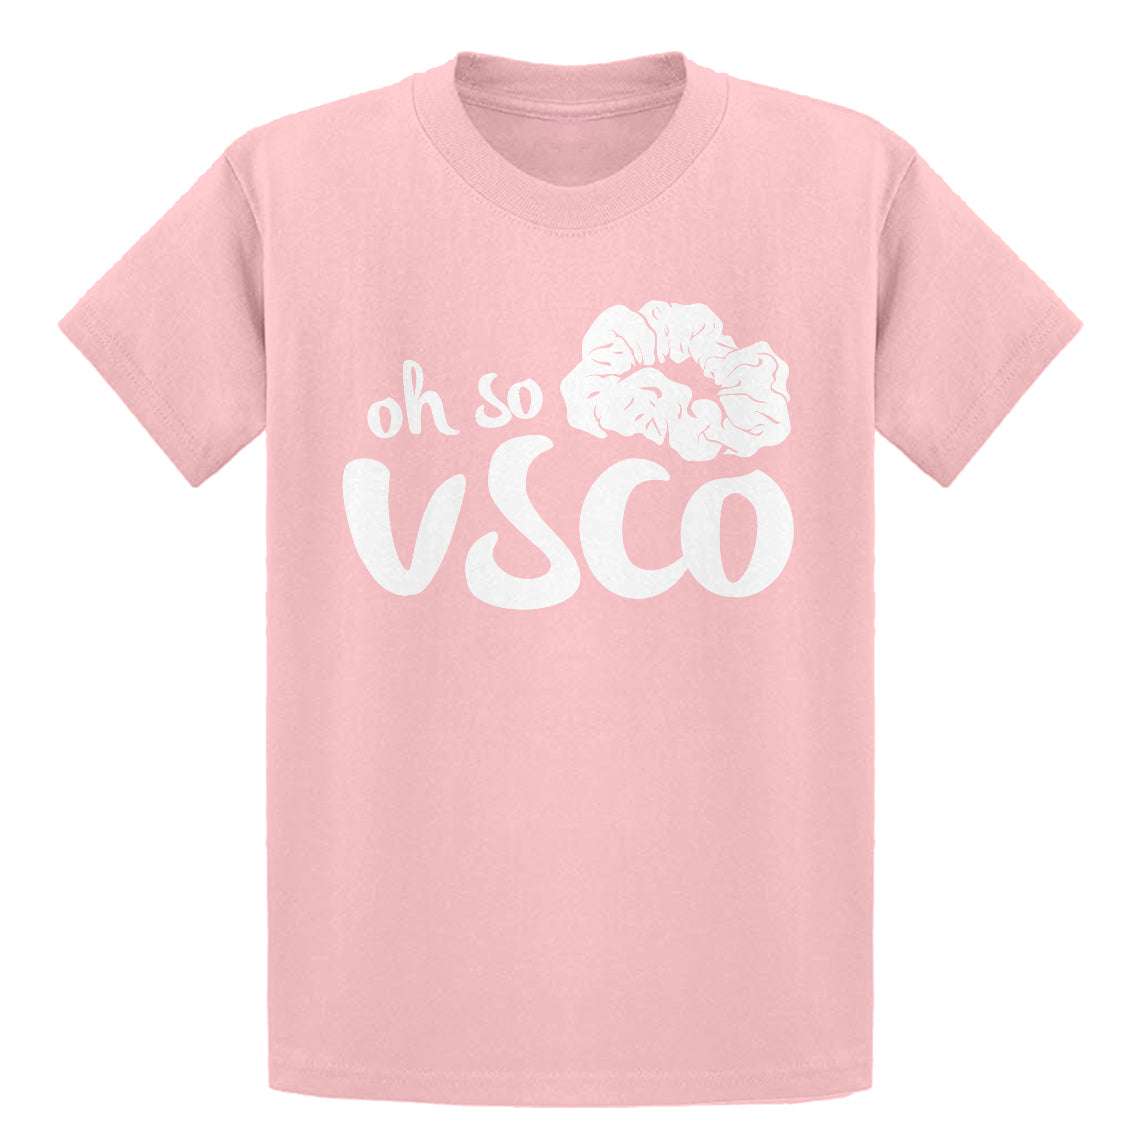 Oh So USCO Kids T-Shirt